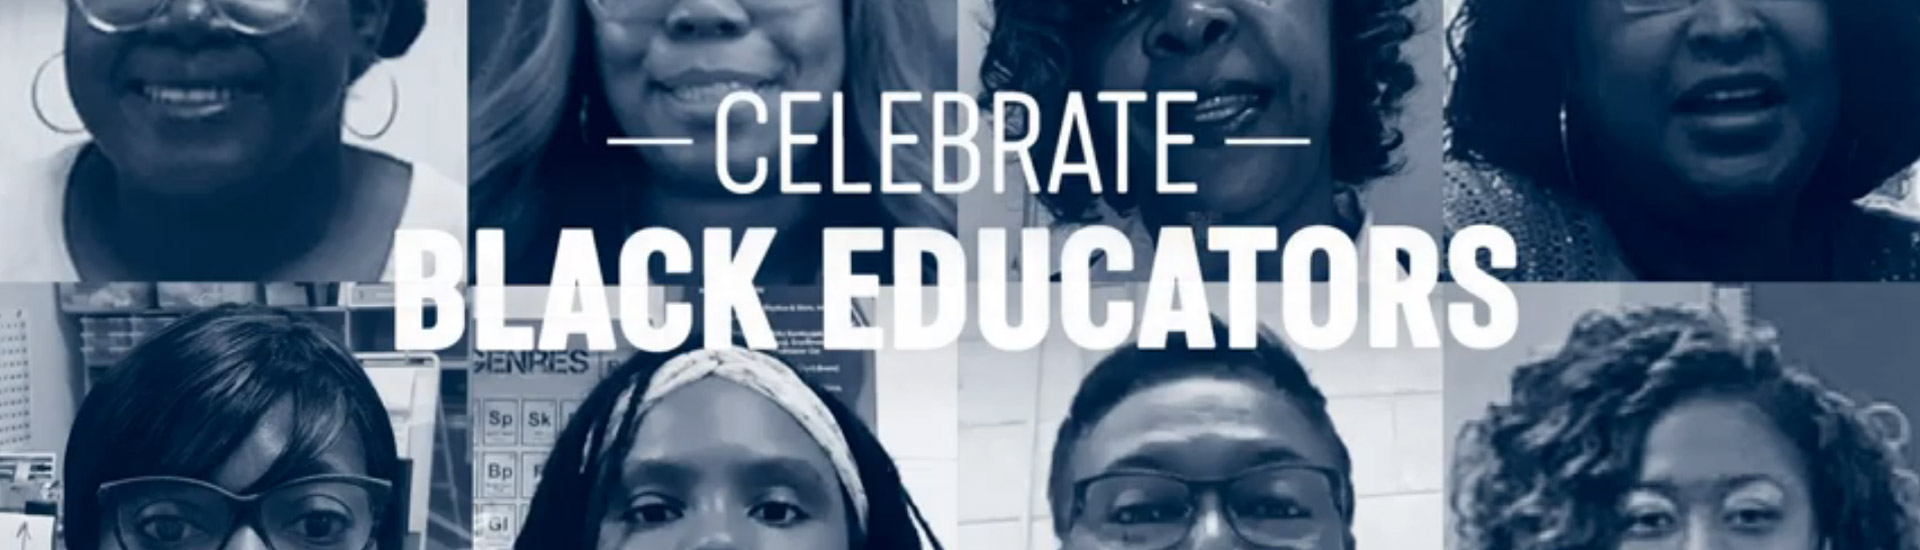 Celebrate Black Educators